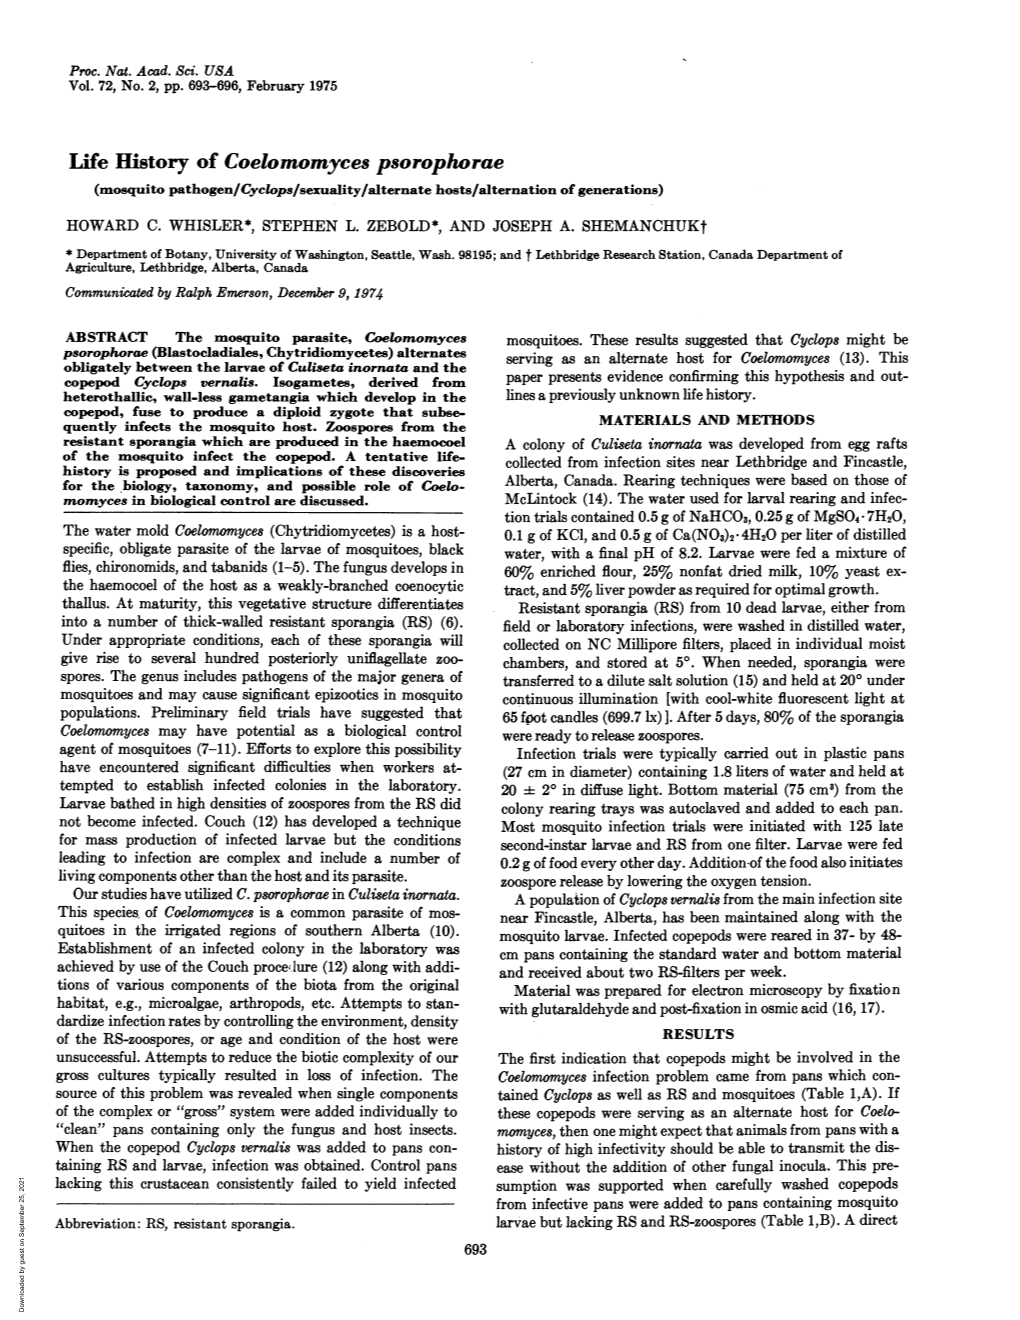 Life History of Coelomomyces Psorophorae (Mosquito Pathogen/Cyclops/Sexuality/Alternate Hosts/Alternation of Generations) HOWARD C